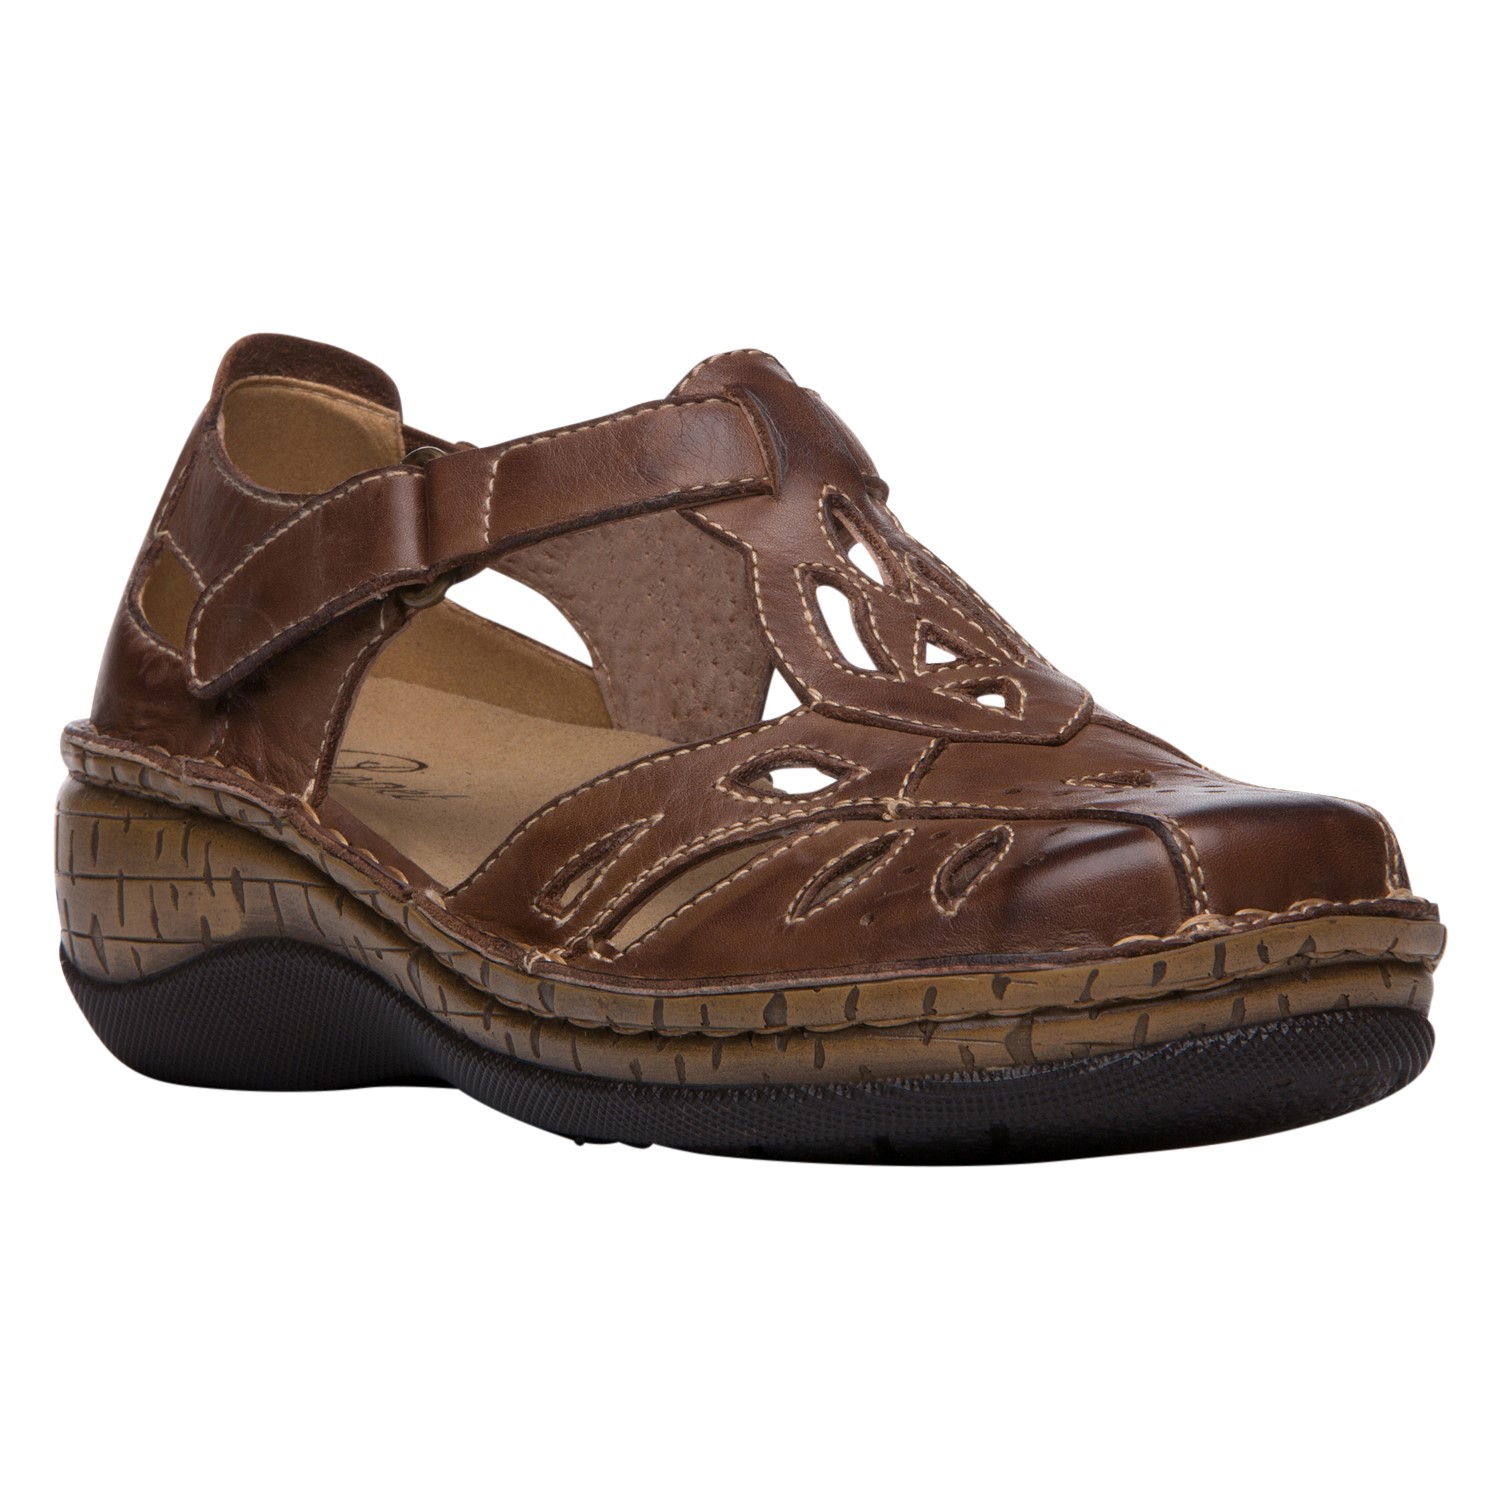 ortho women's sandals